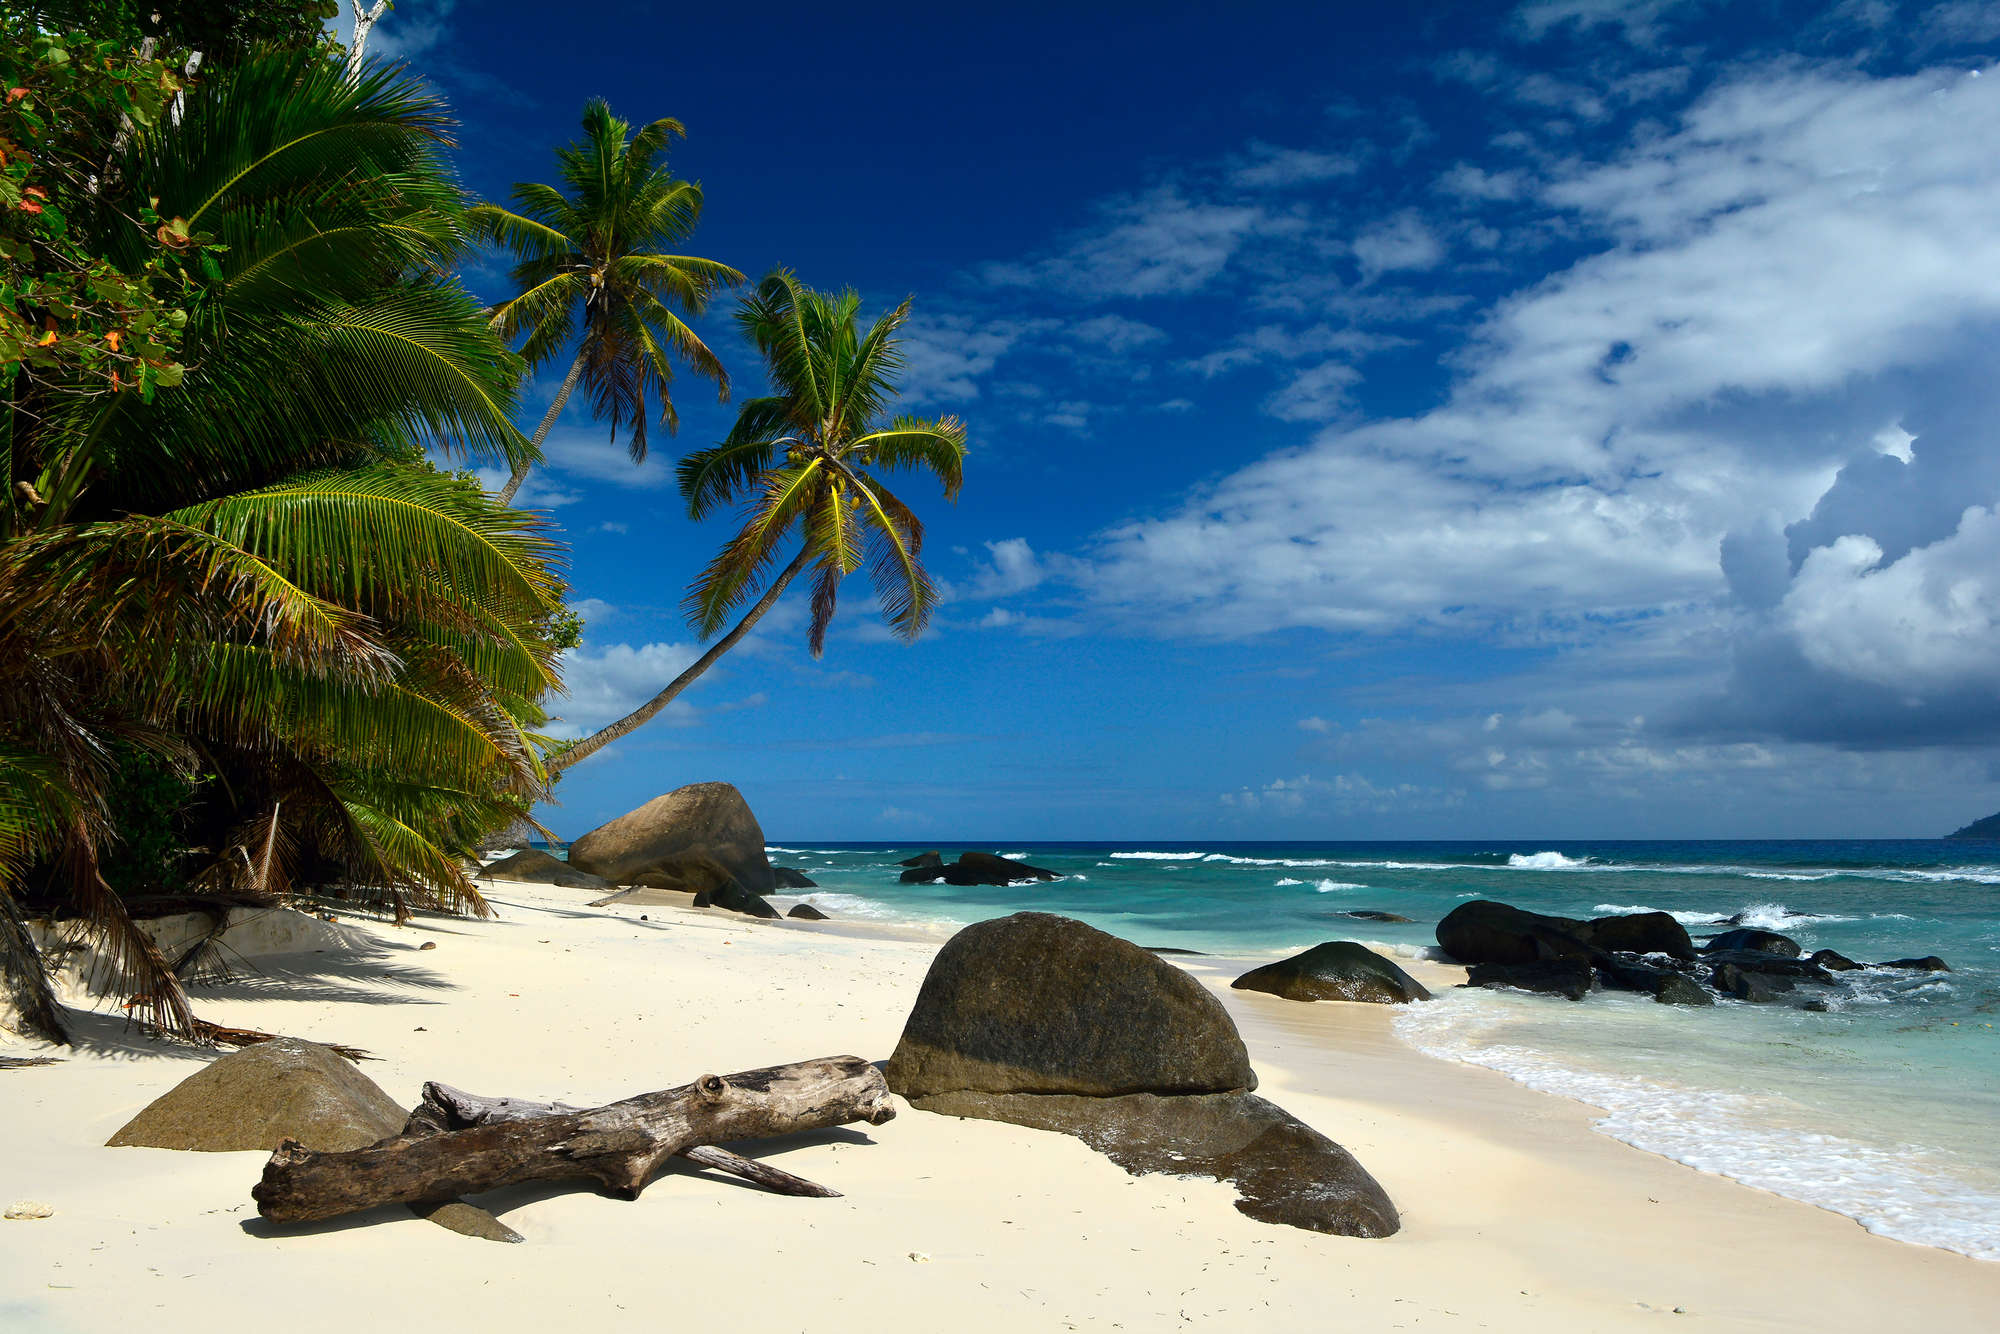             Südsee Fototapete Seychellen Palmen & Strand auf Matt Glattvlies
        